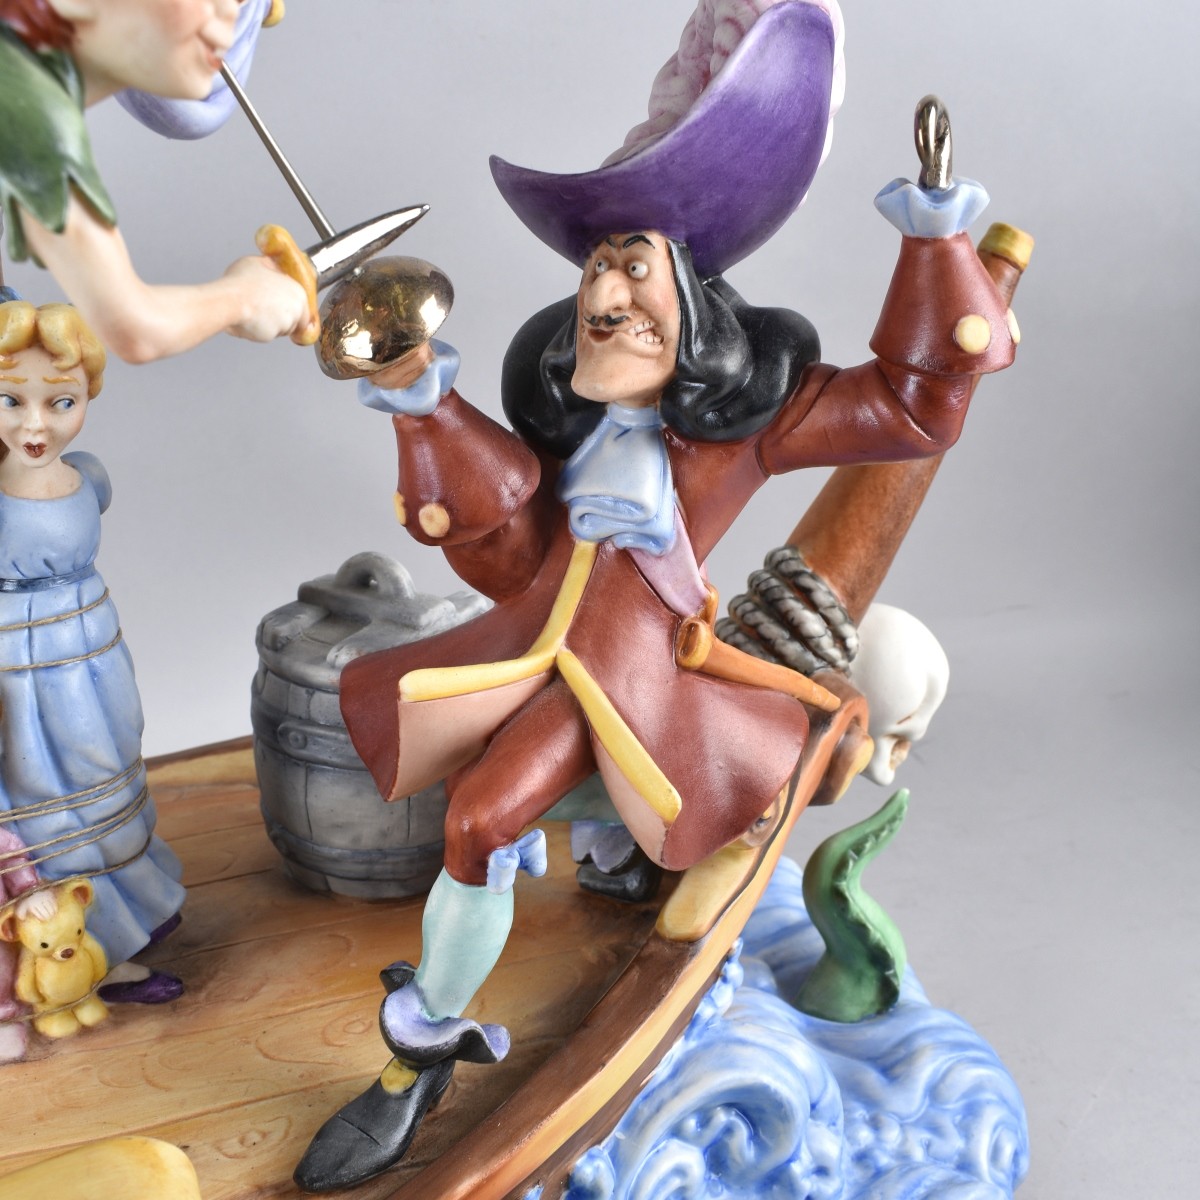 Capodimonte for Walt Disney "Peter Pan" Figurine